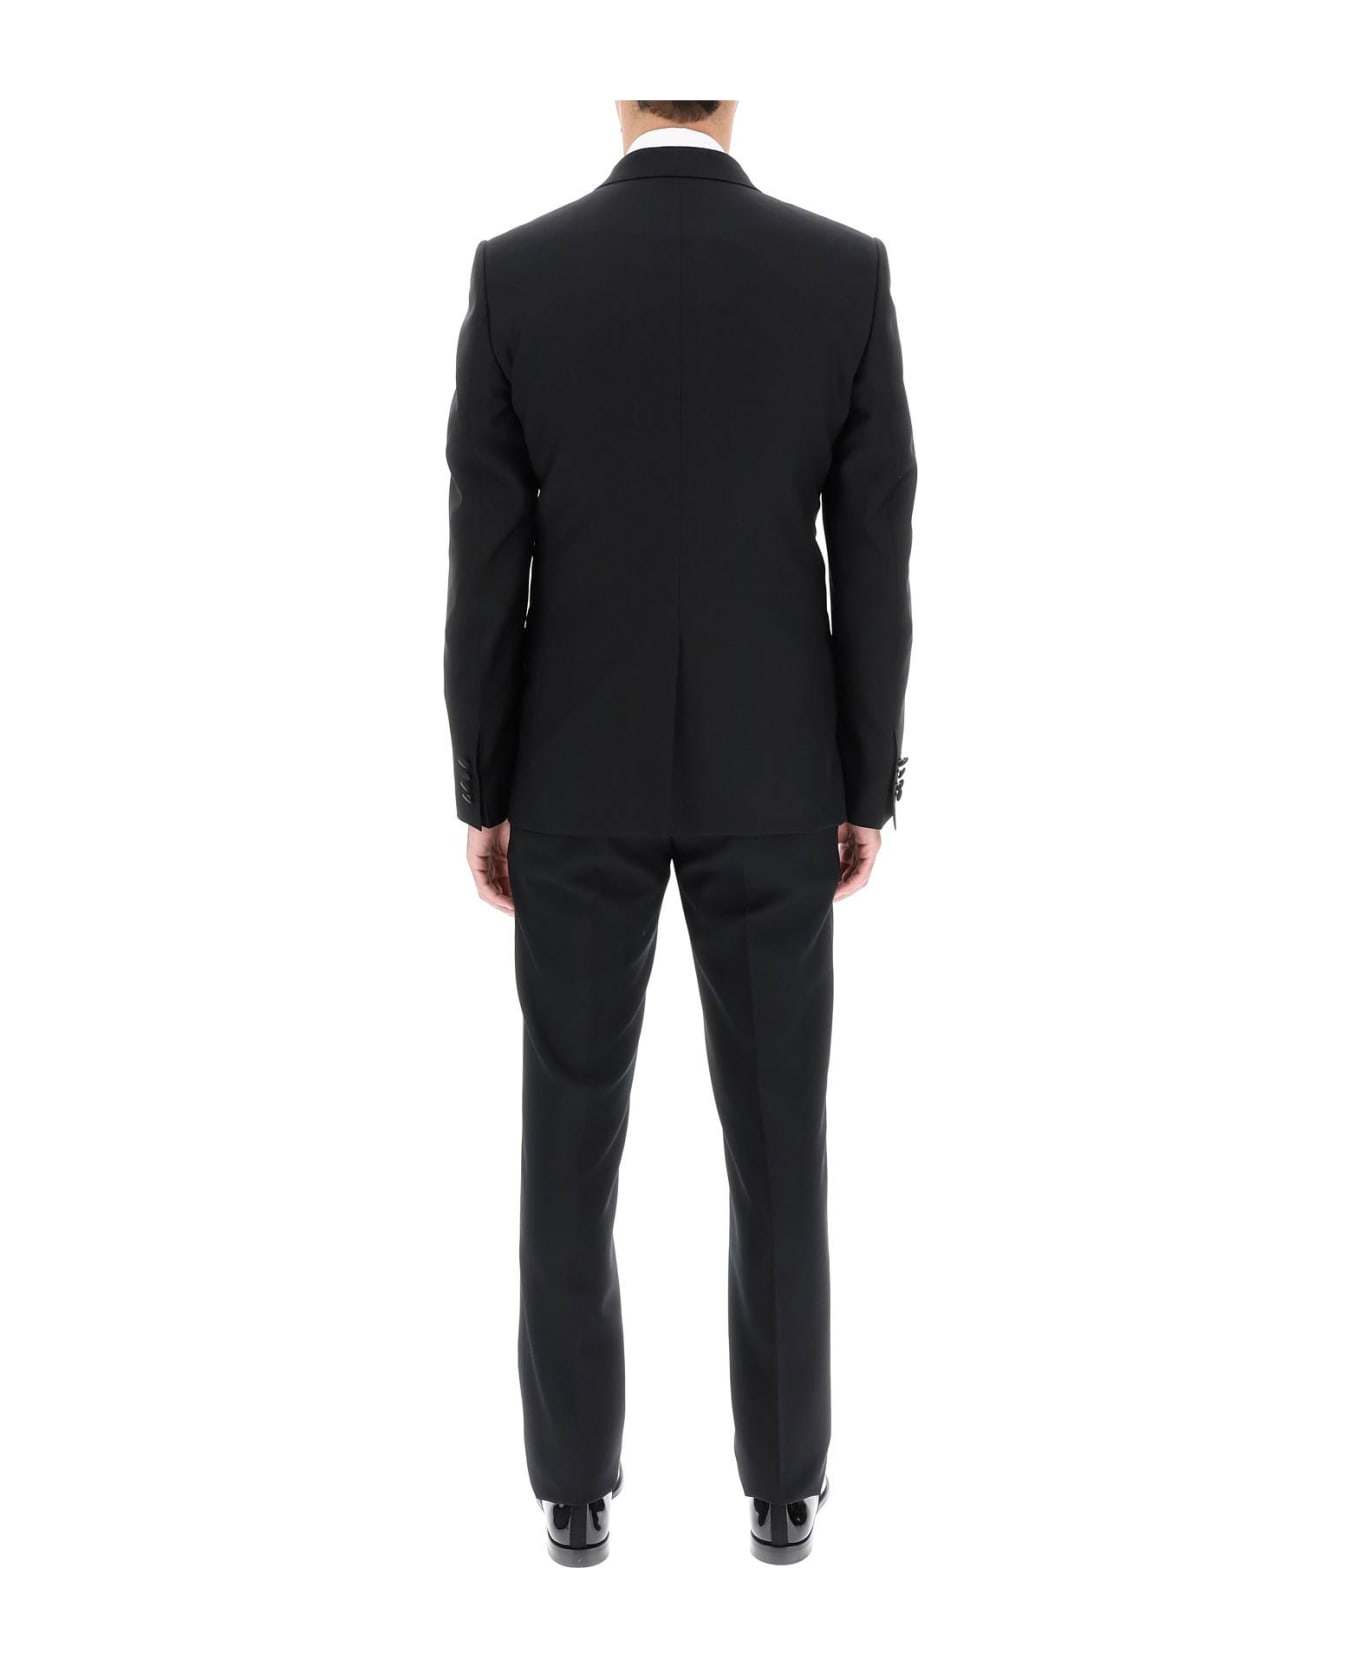 Dolce & Gabbana Martini Fit Tuxedo Suit - Black